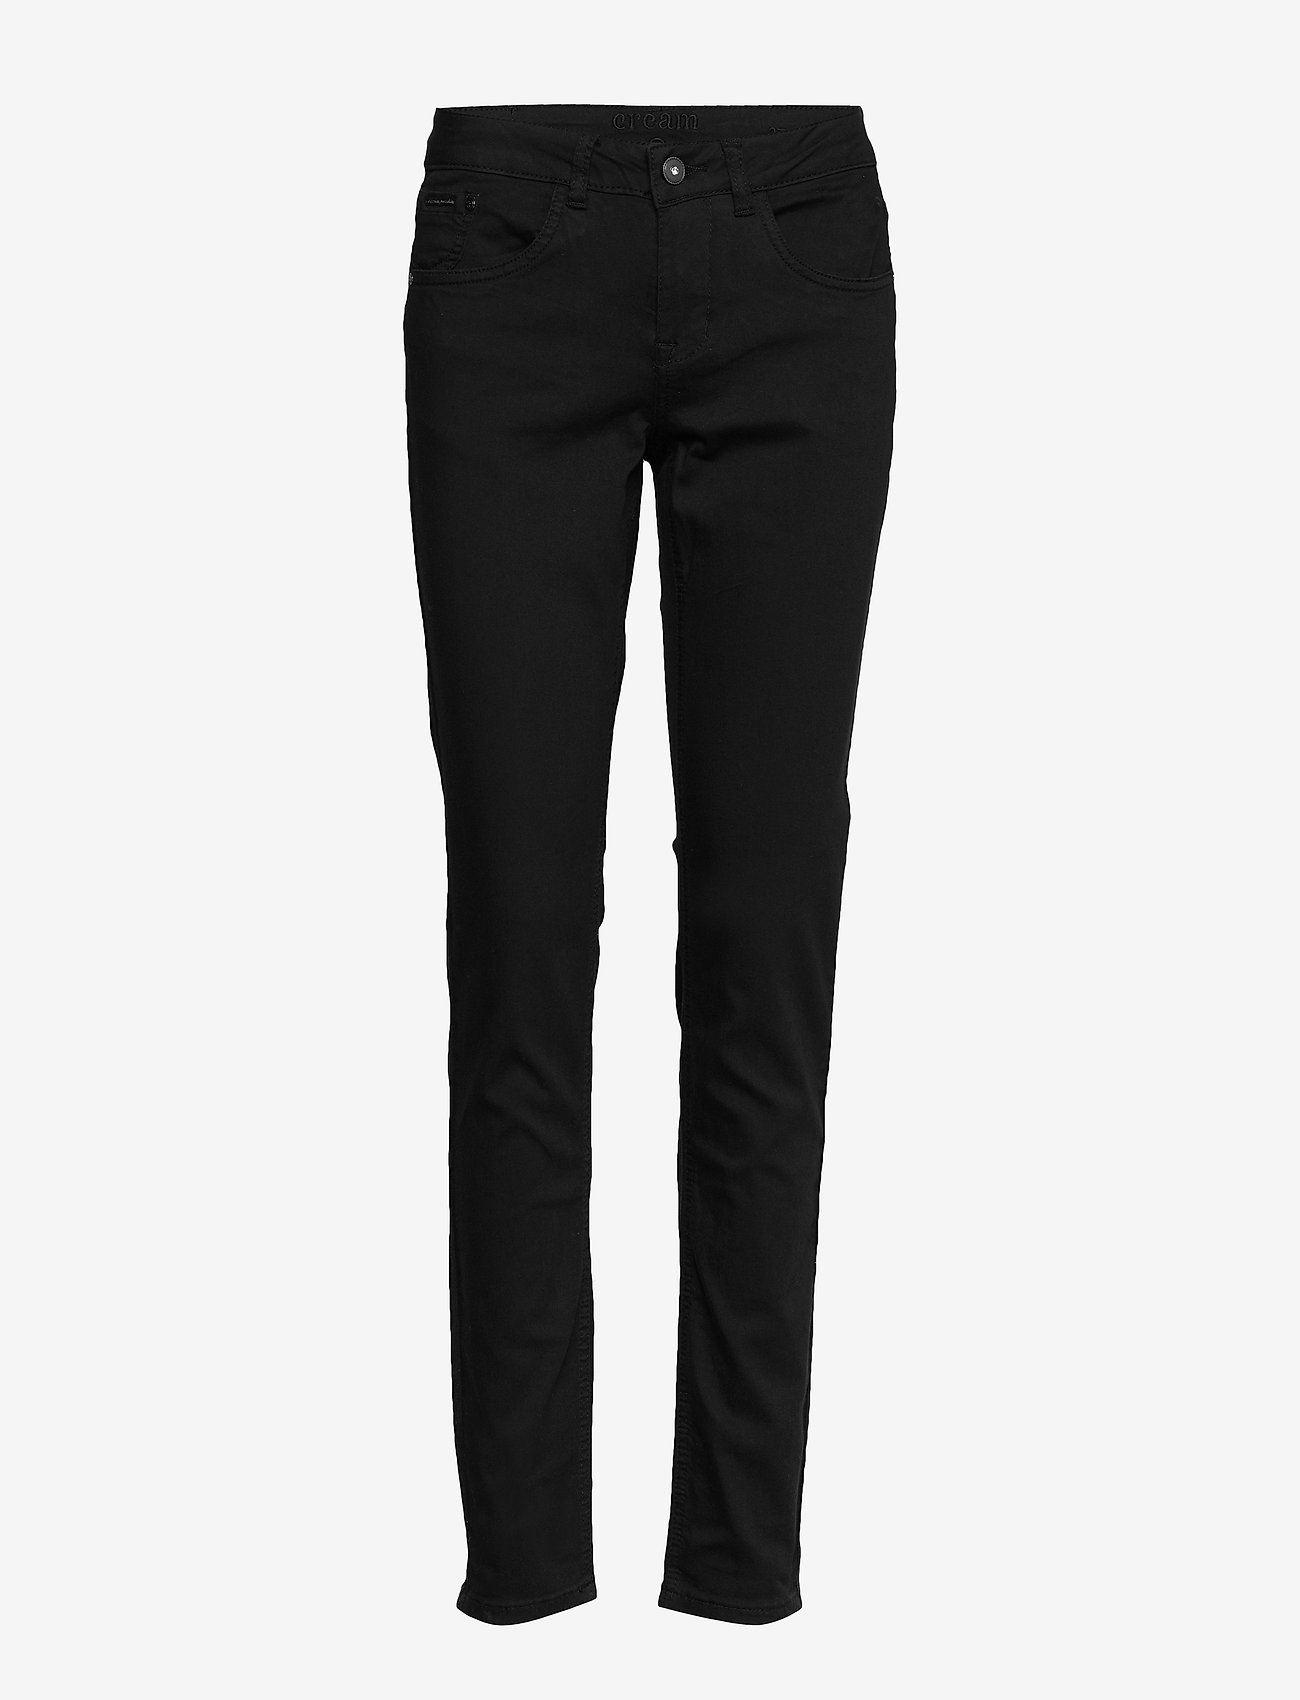 Cream - LotteCR Plain Twill - Coco Fit - skinny jeans - pitch black - 0